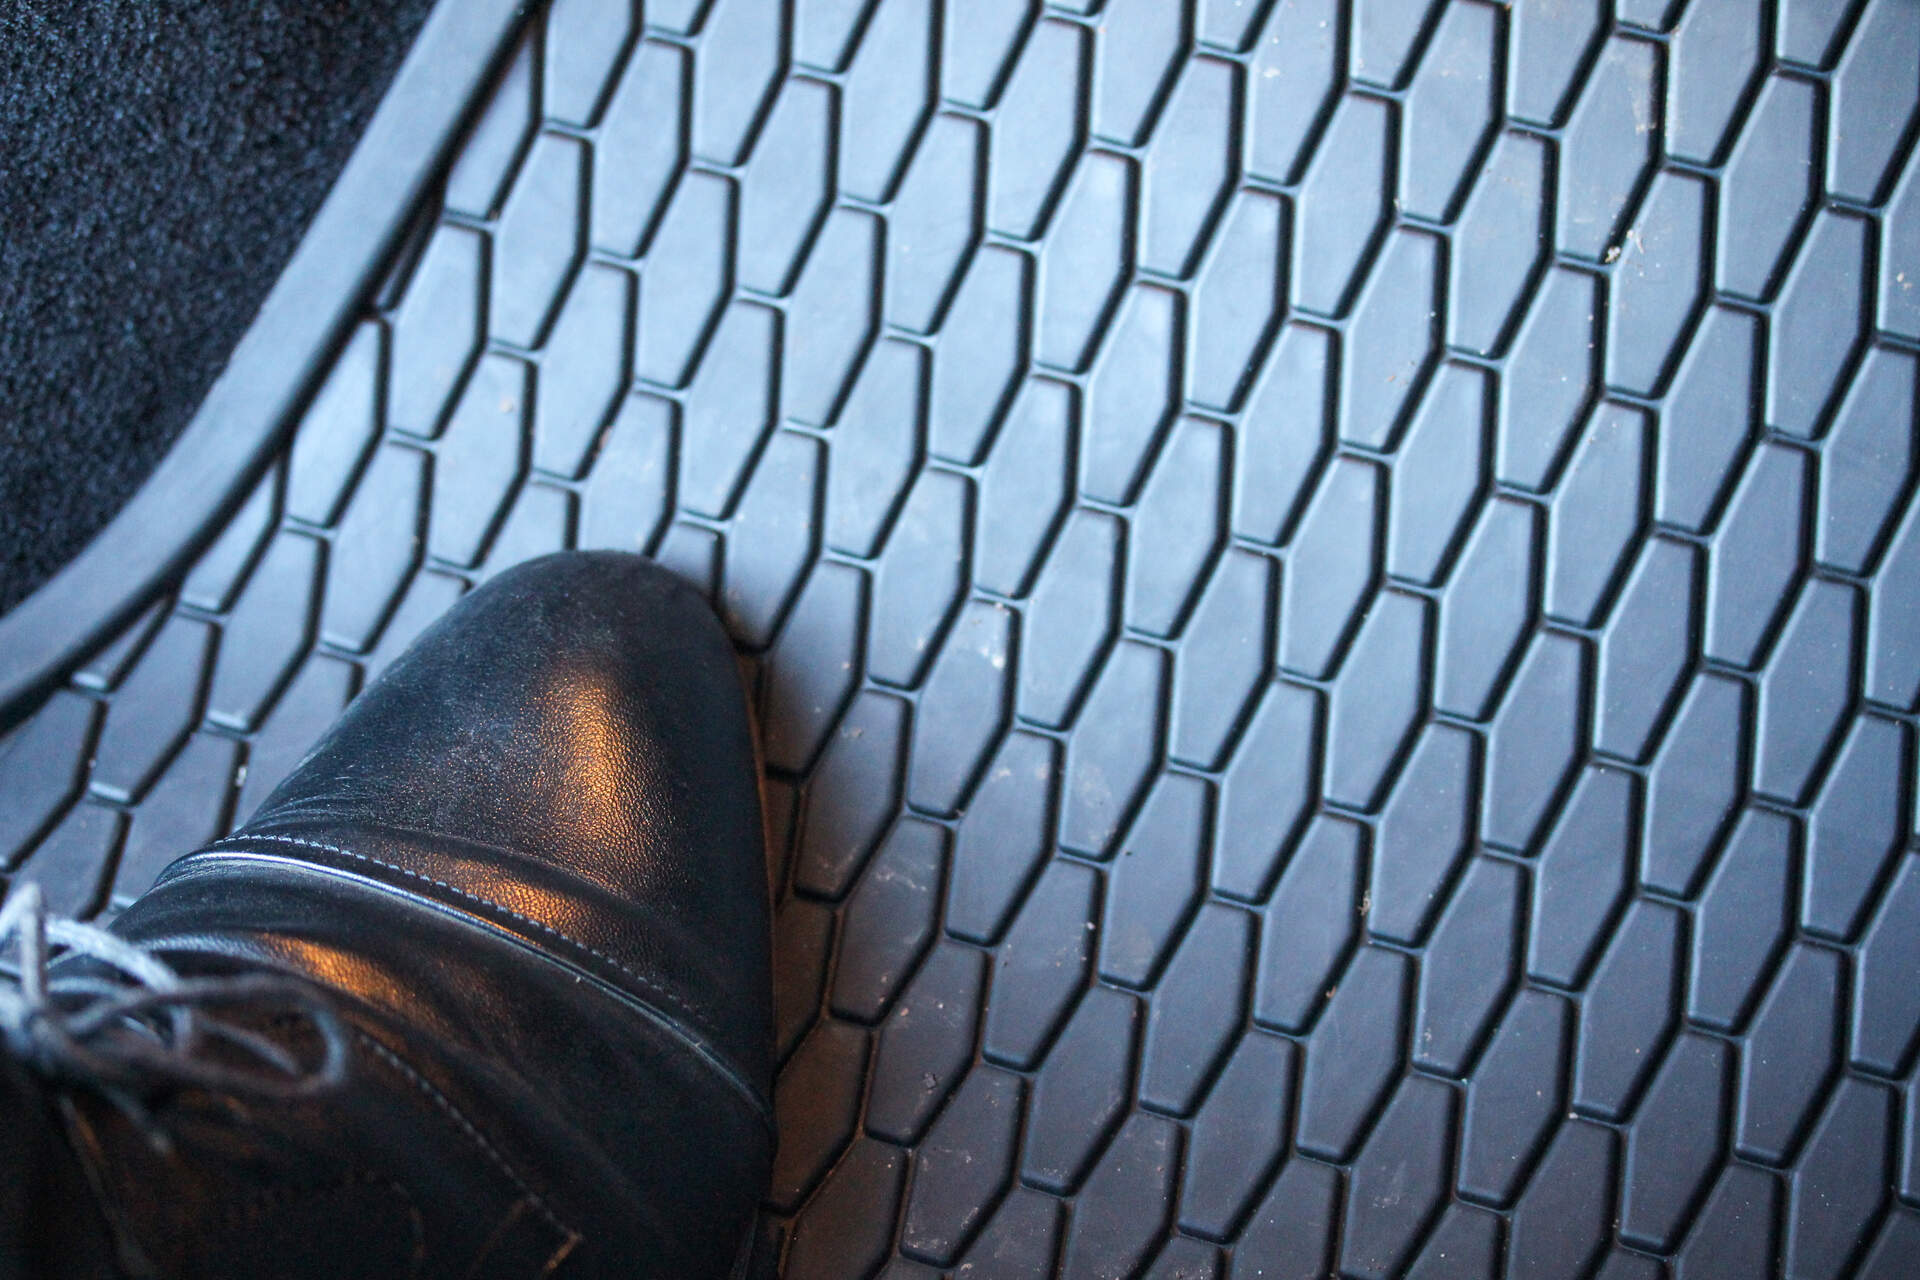 A tip of a shoe on a rubber car mat